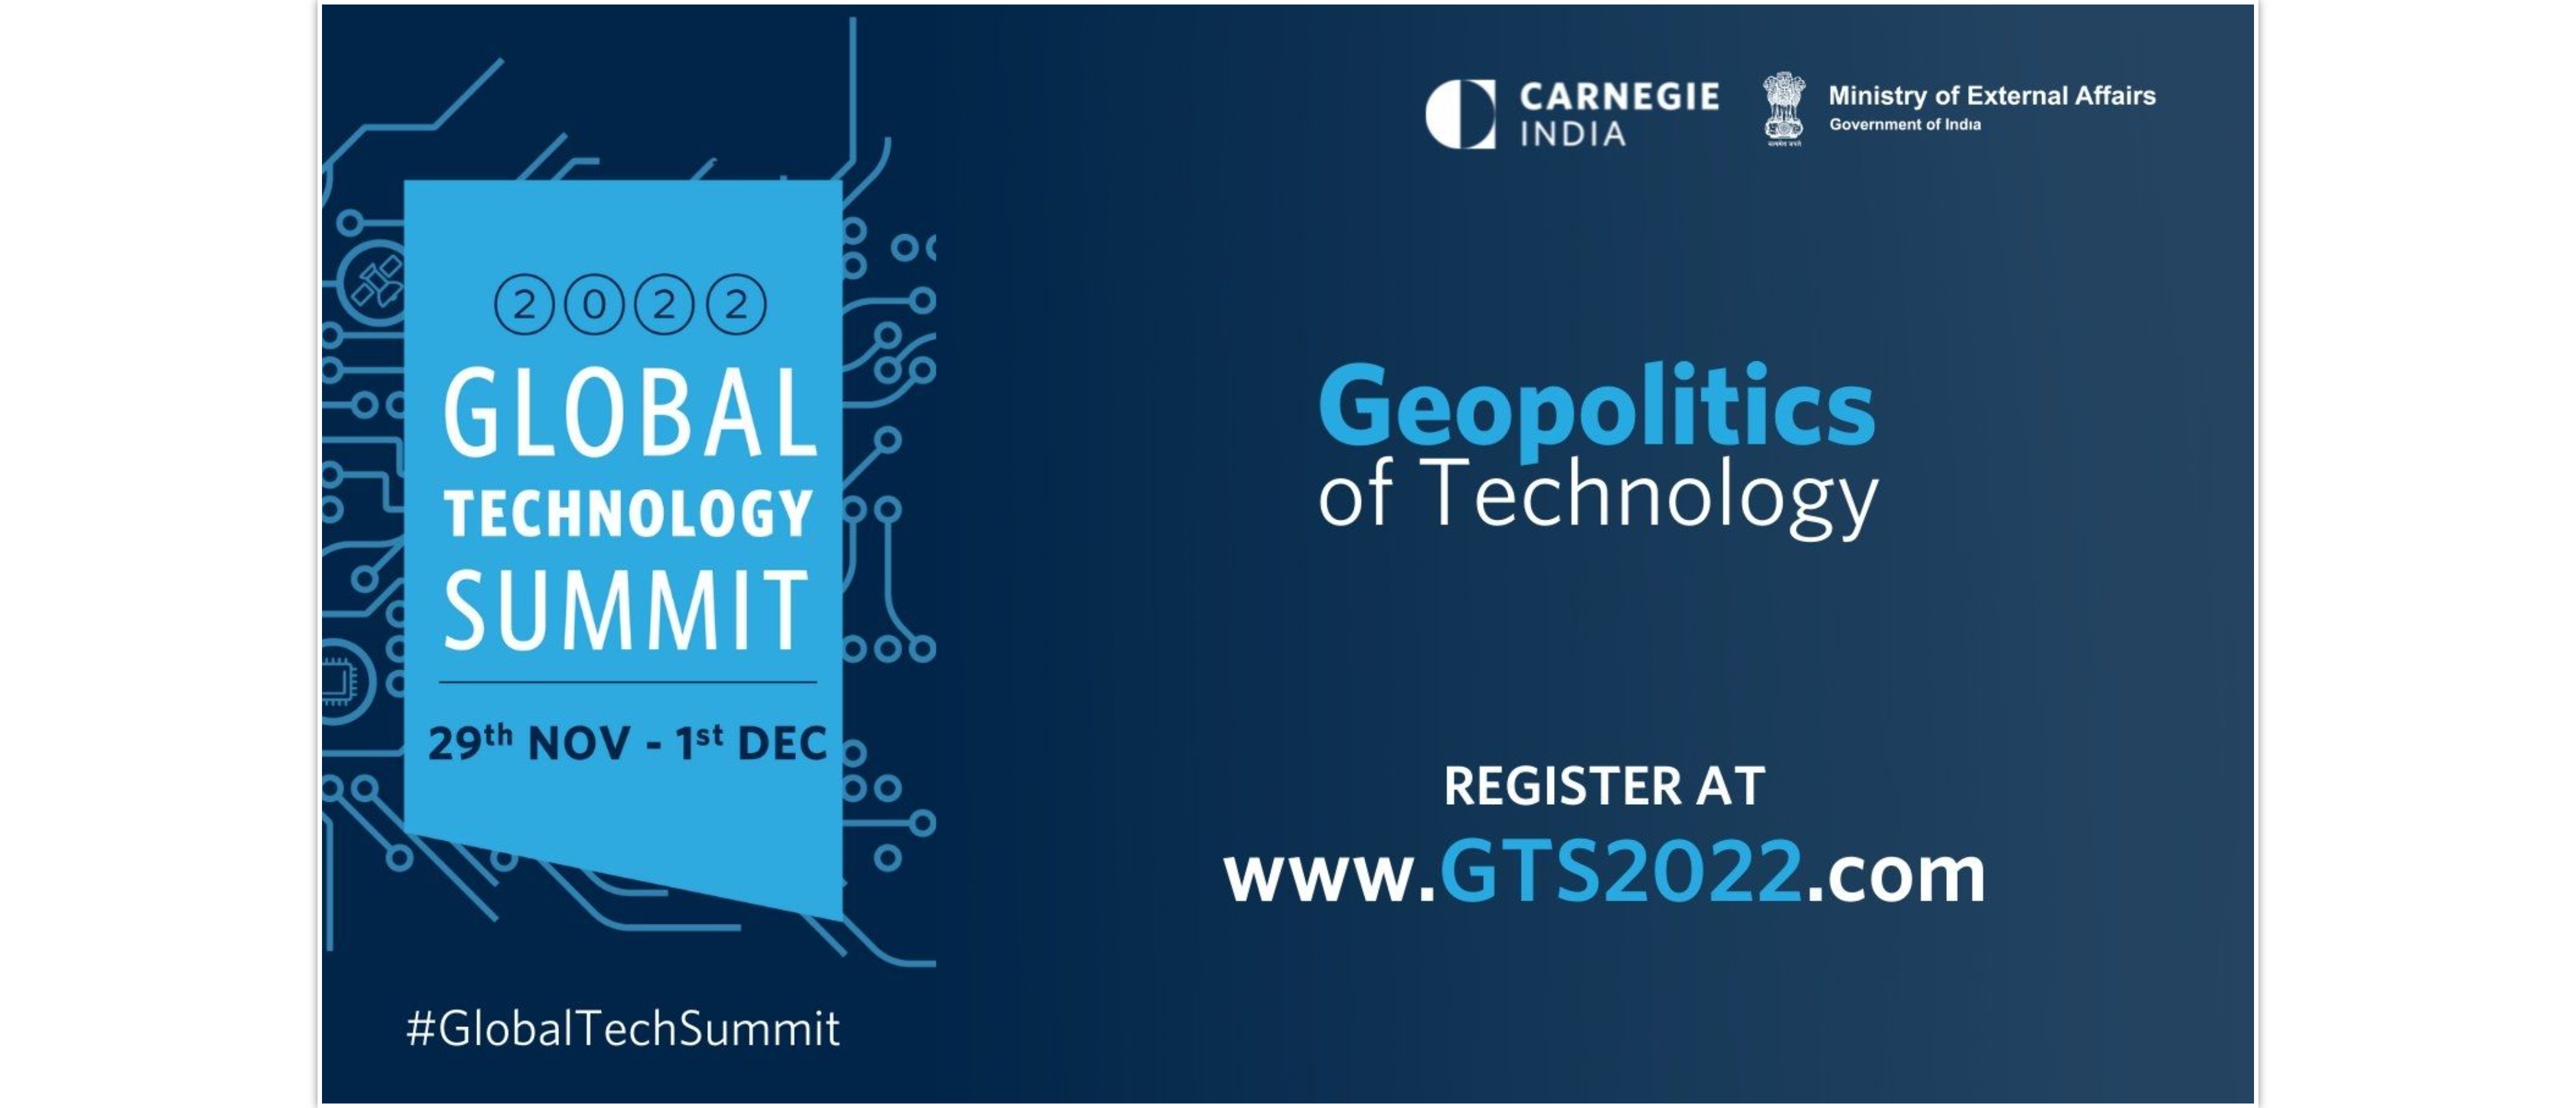   Global Technology Summit 2022